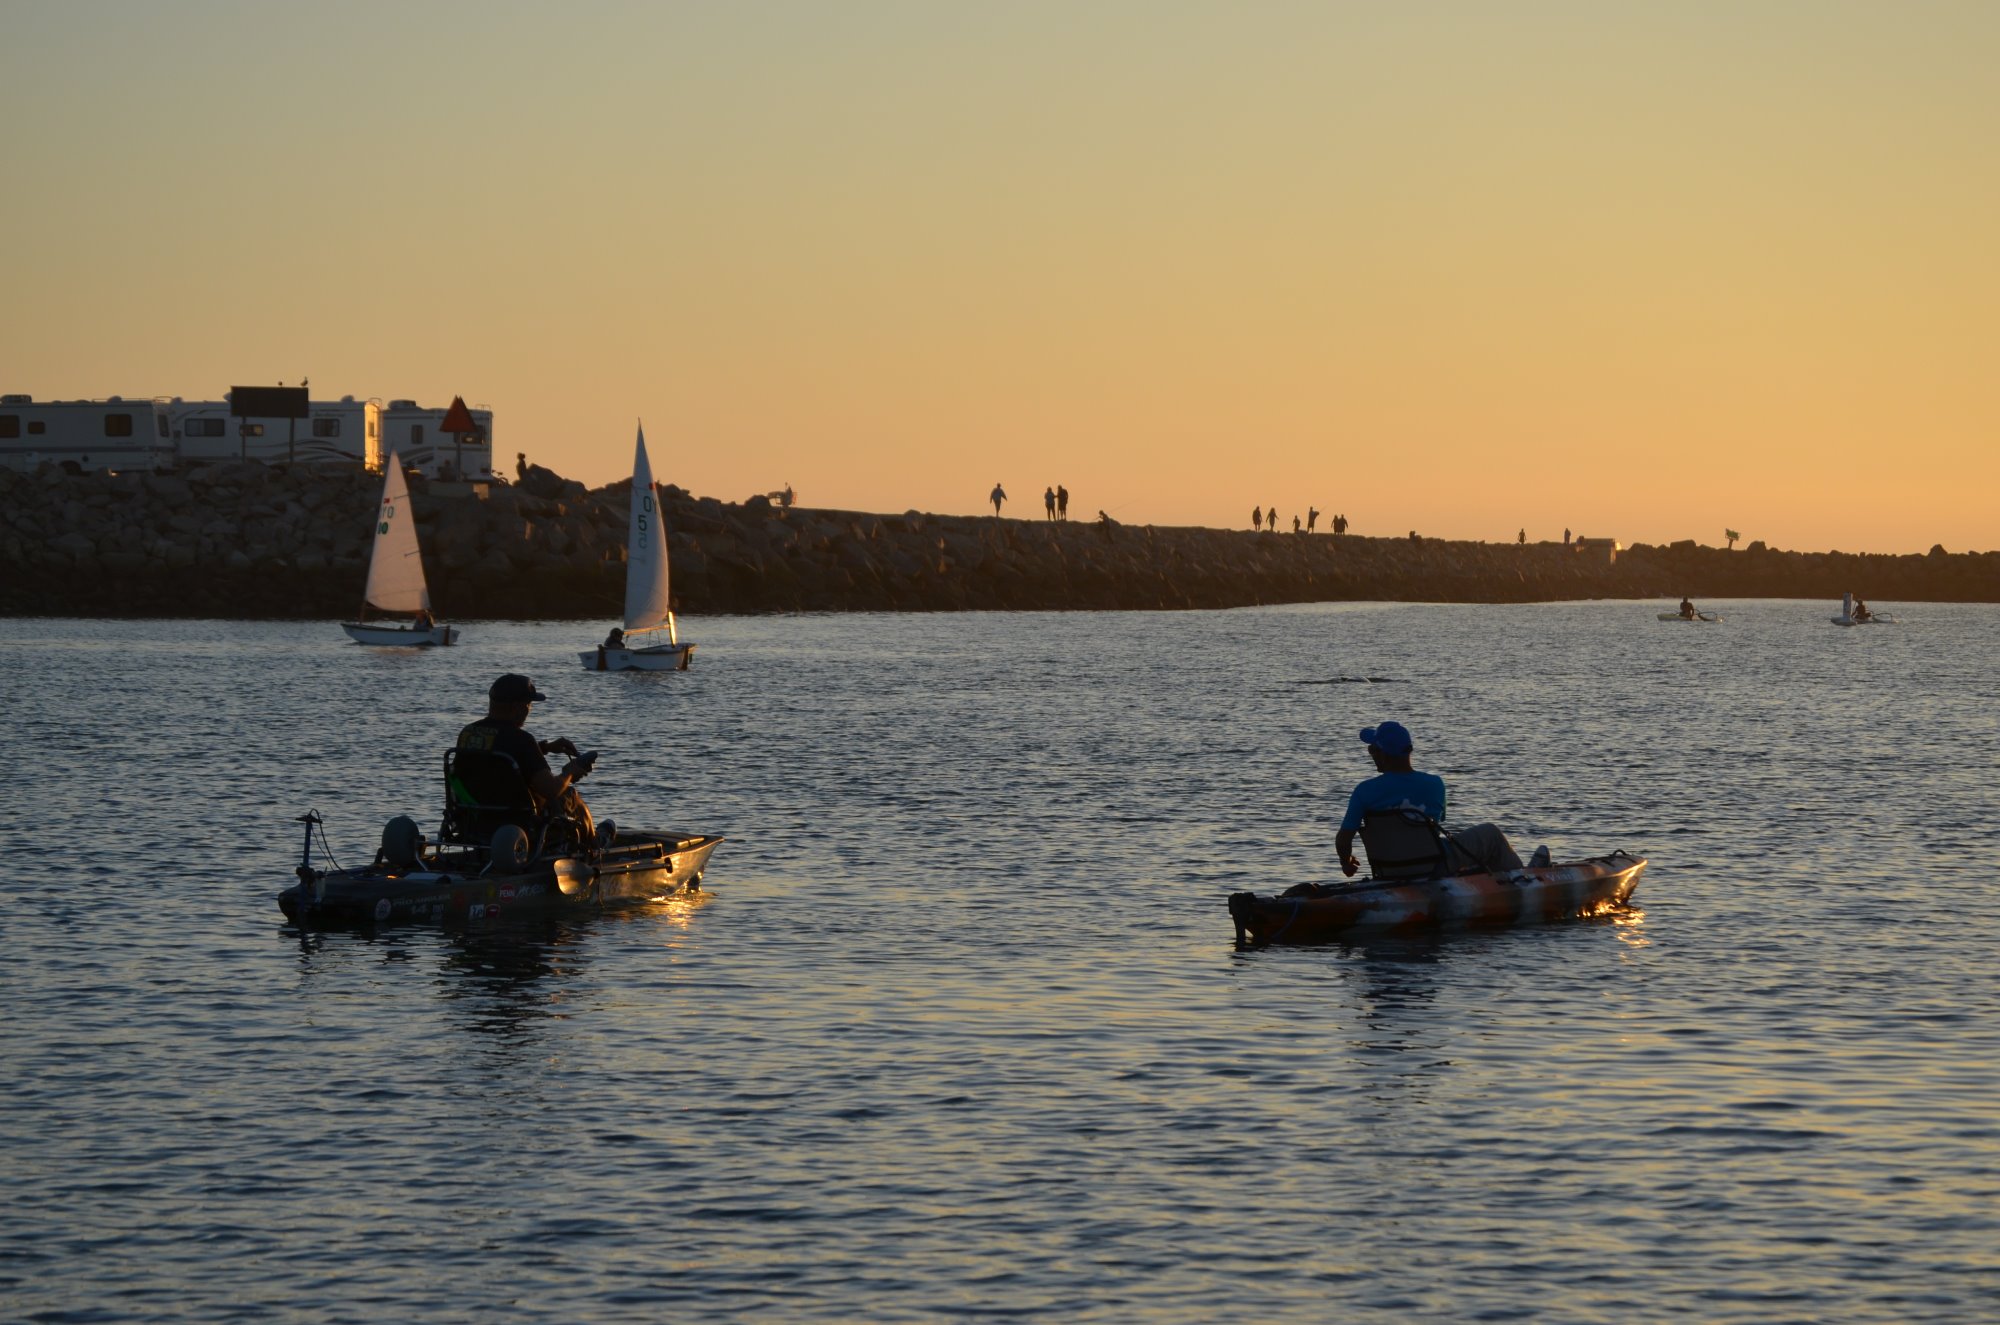 Two kayaks with Bixpy motors at sunset